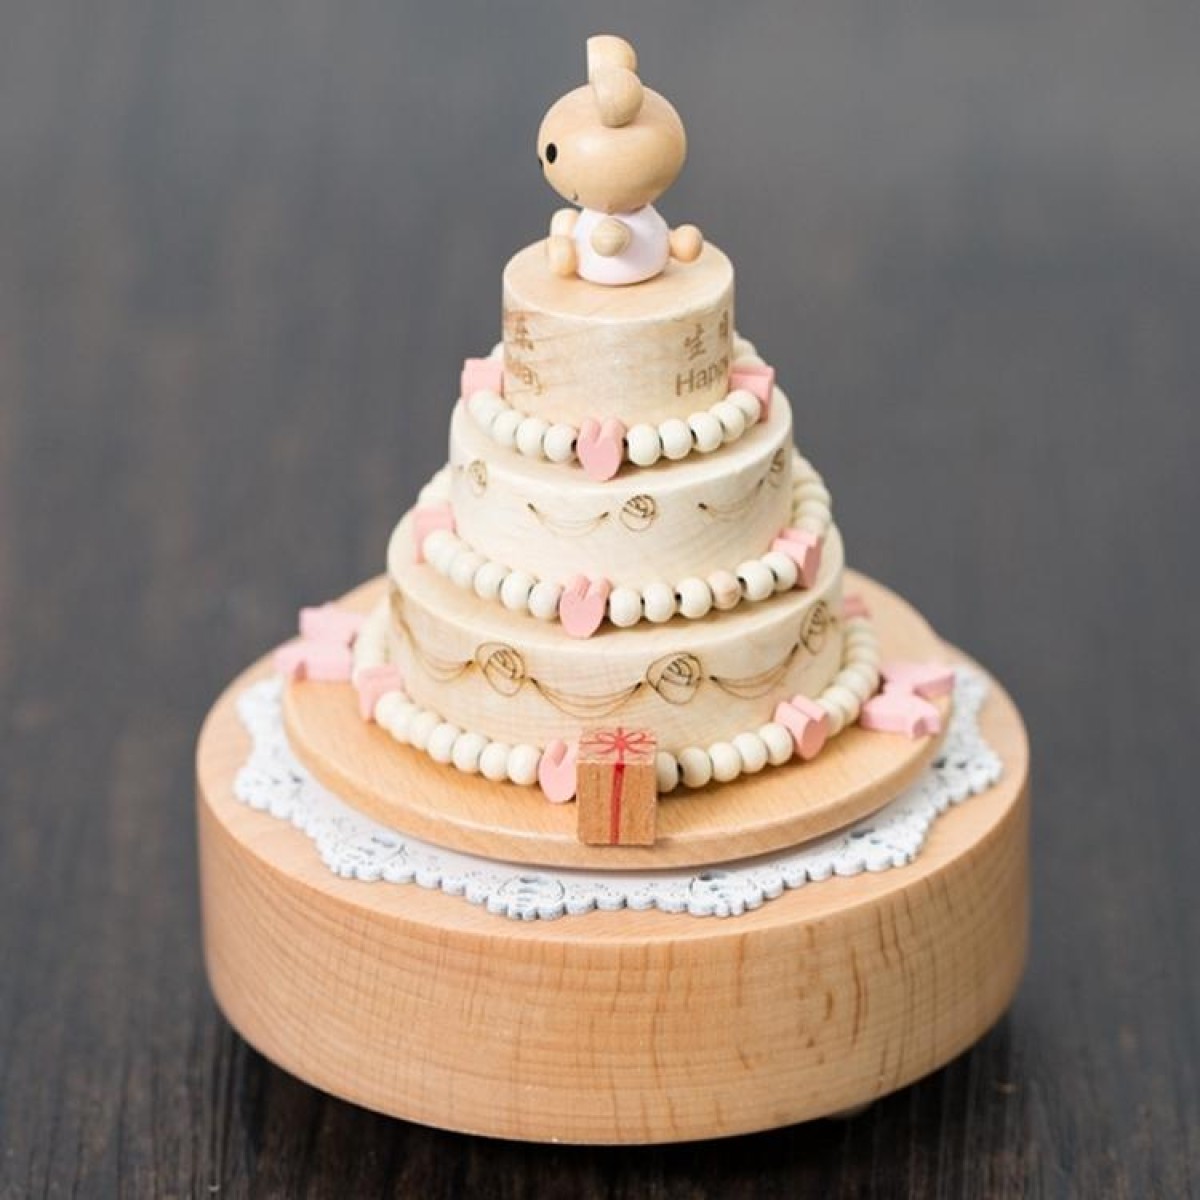 Birthday Cake Shape Home Decor Originality  Wooden Musical  Boxes